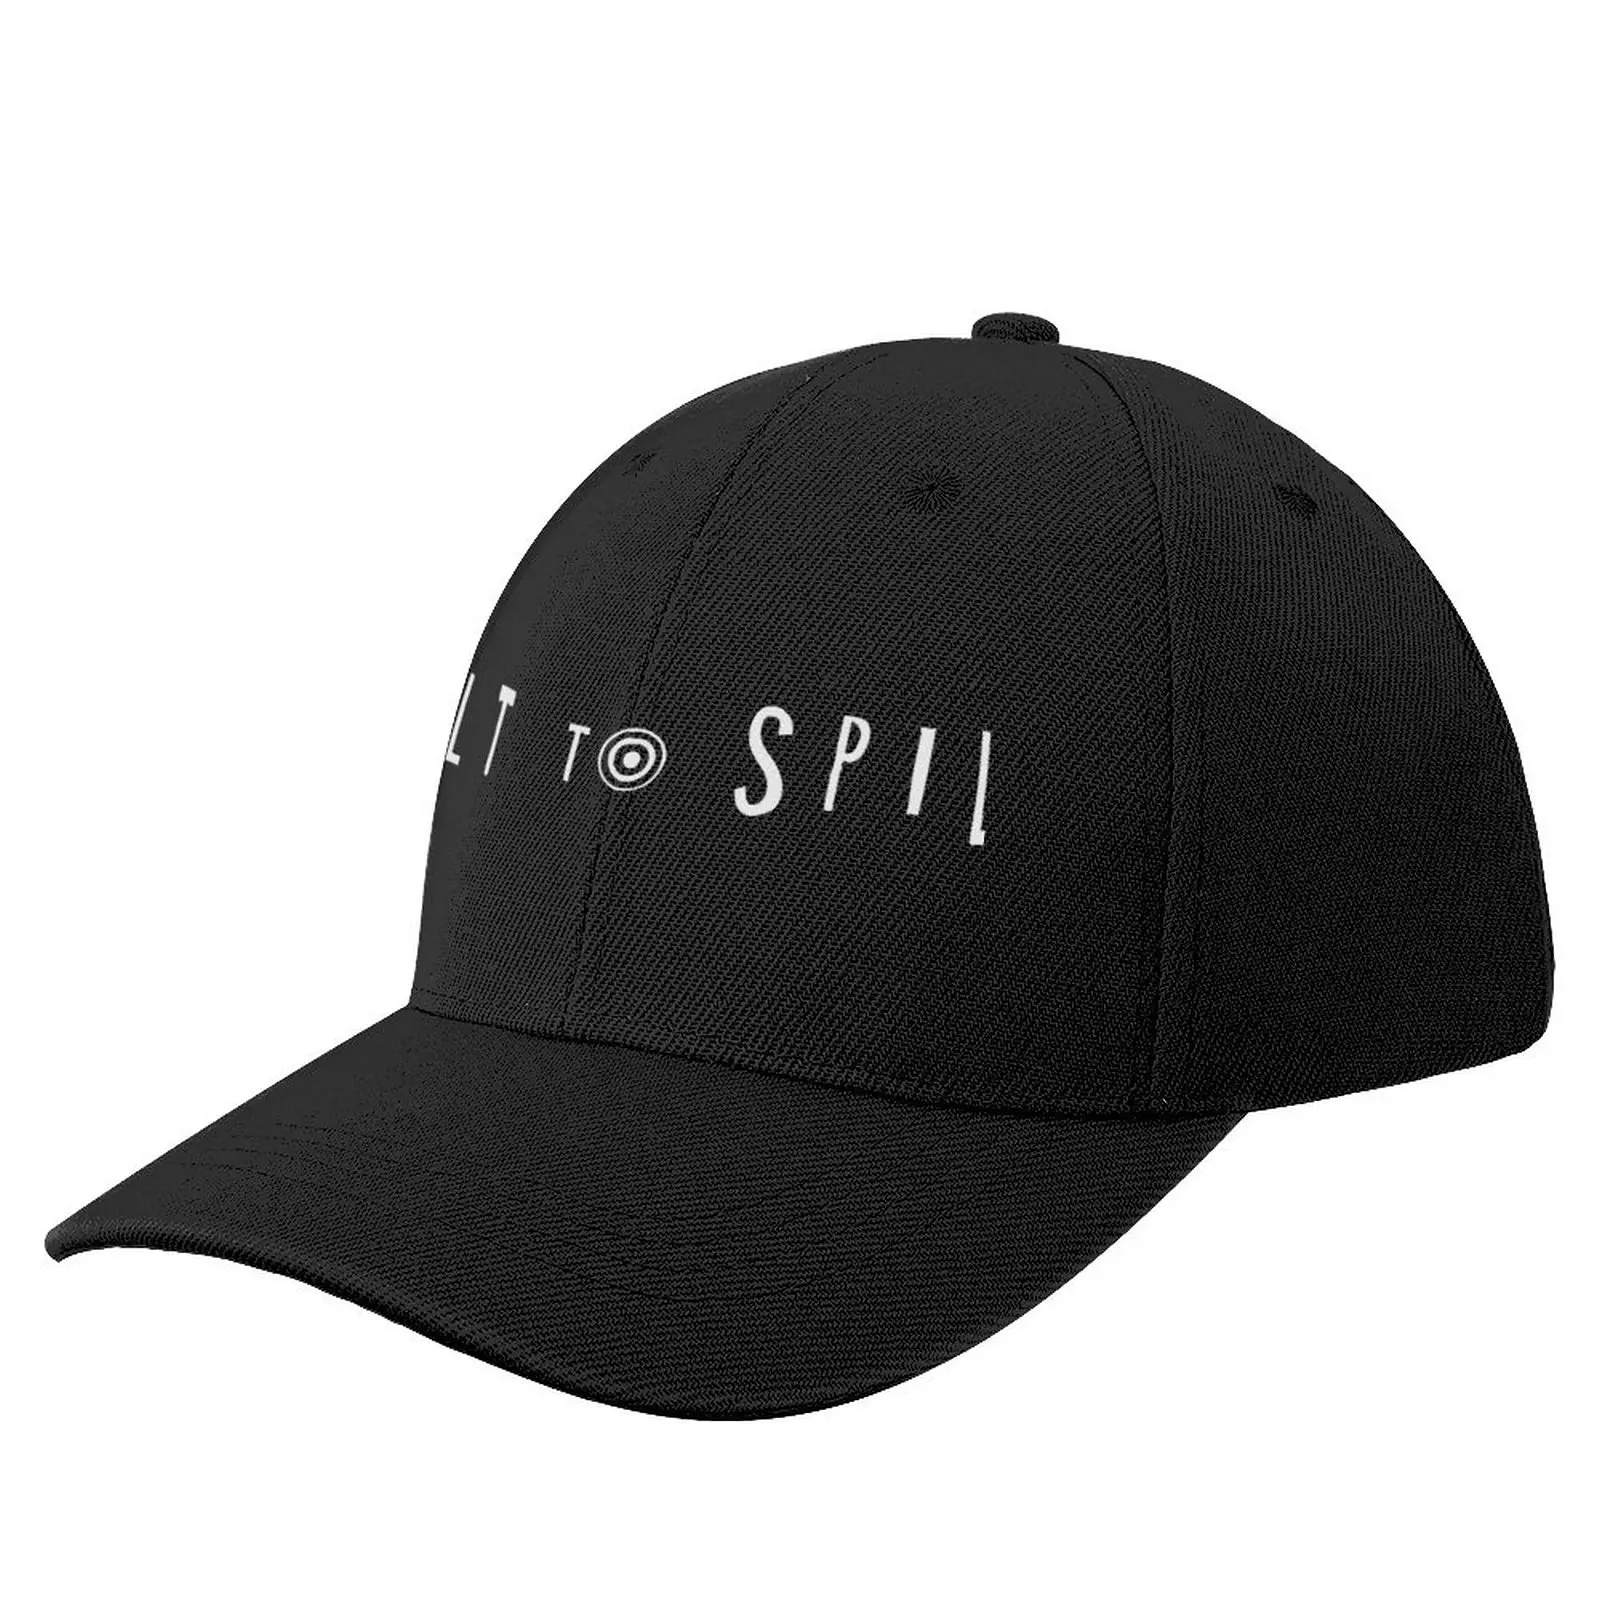 

Built to Spill Baseball Cap Golf Wear Big Size Hat derby hat Snap Back Hat Bobble Hat Caps Male Women's